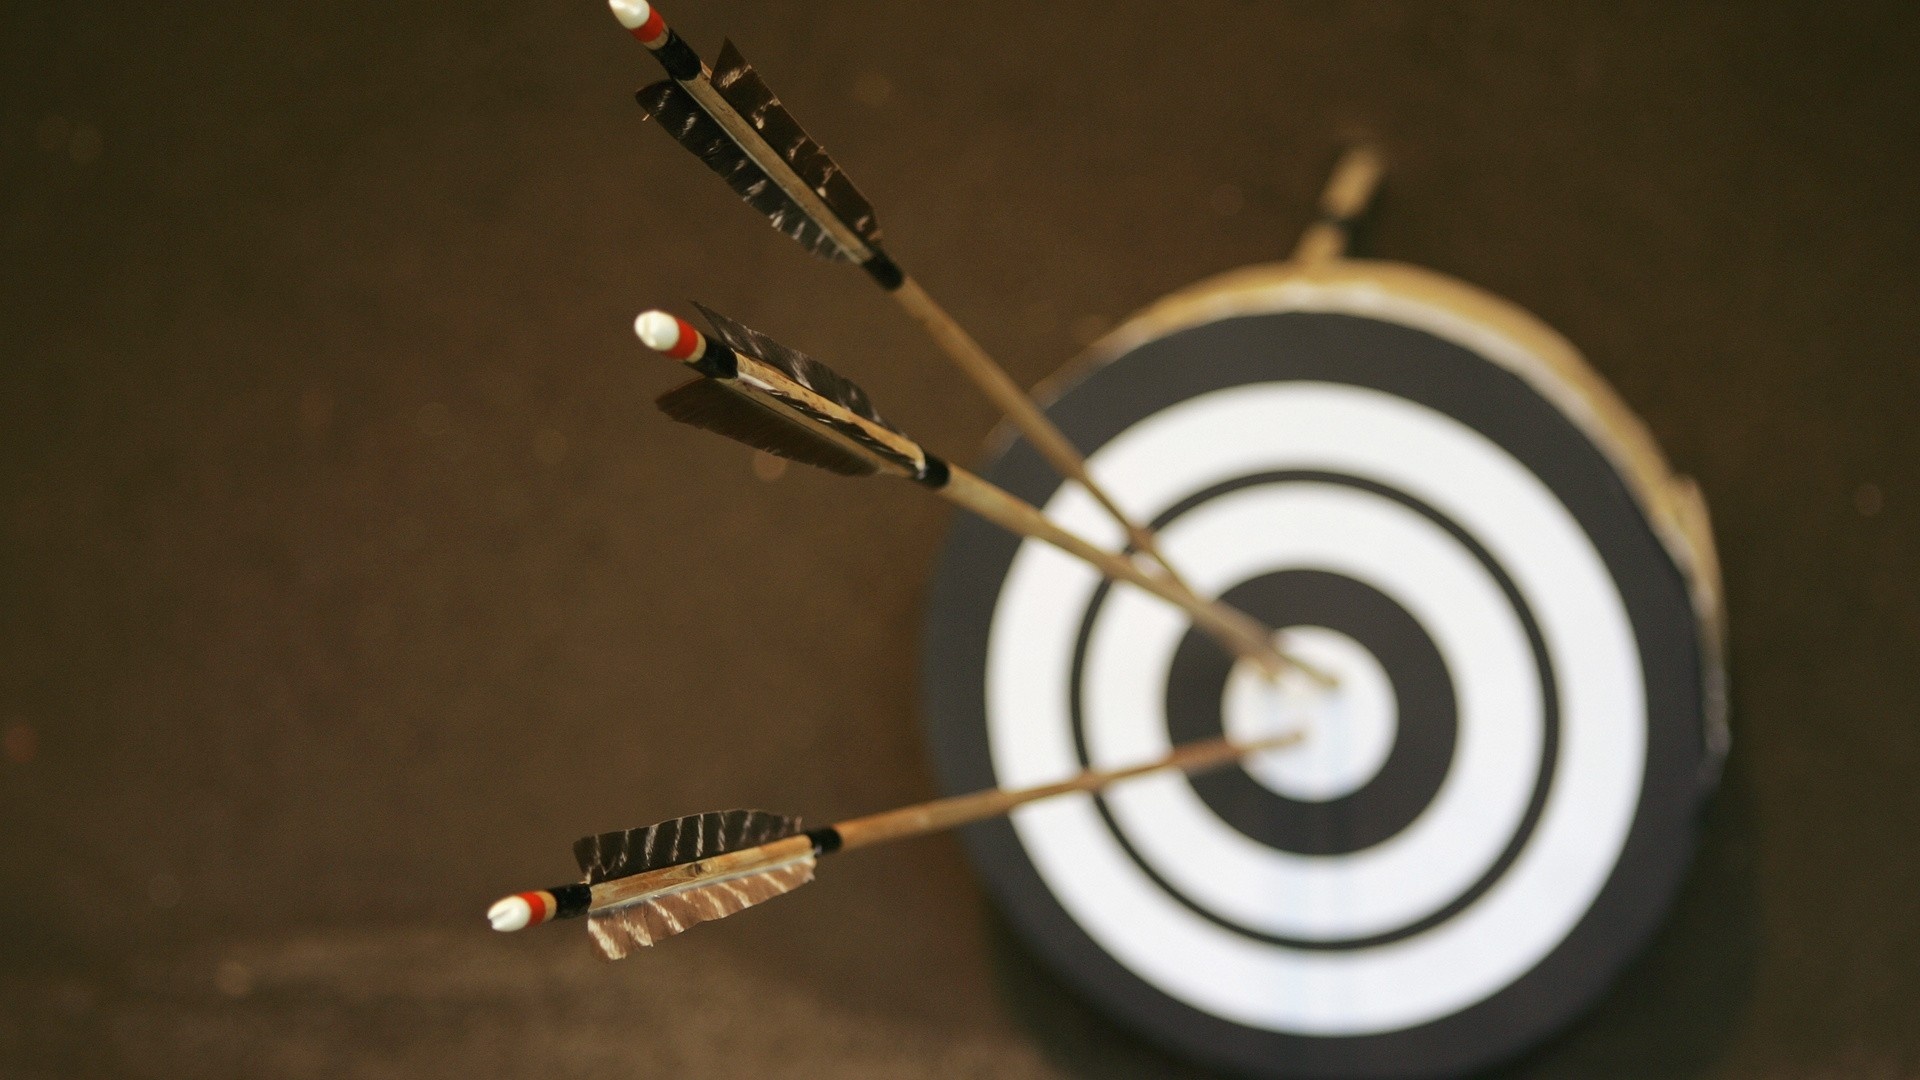 Archery: Black and white target, Arrow shooting sport. 1920x1080 Full HD Wallpaper.